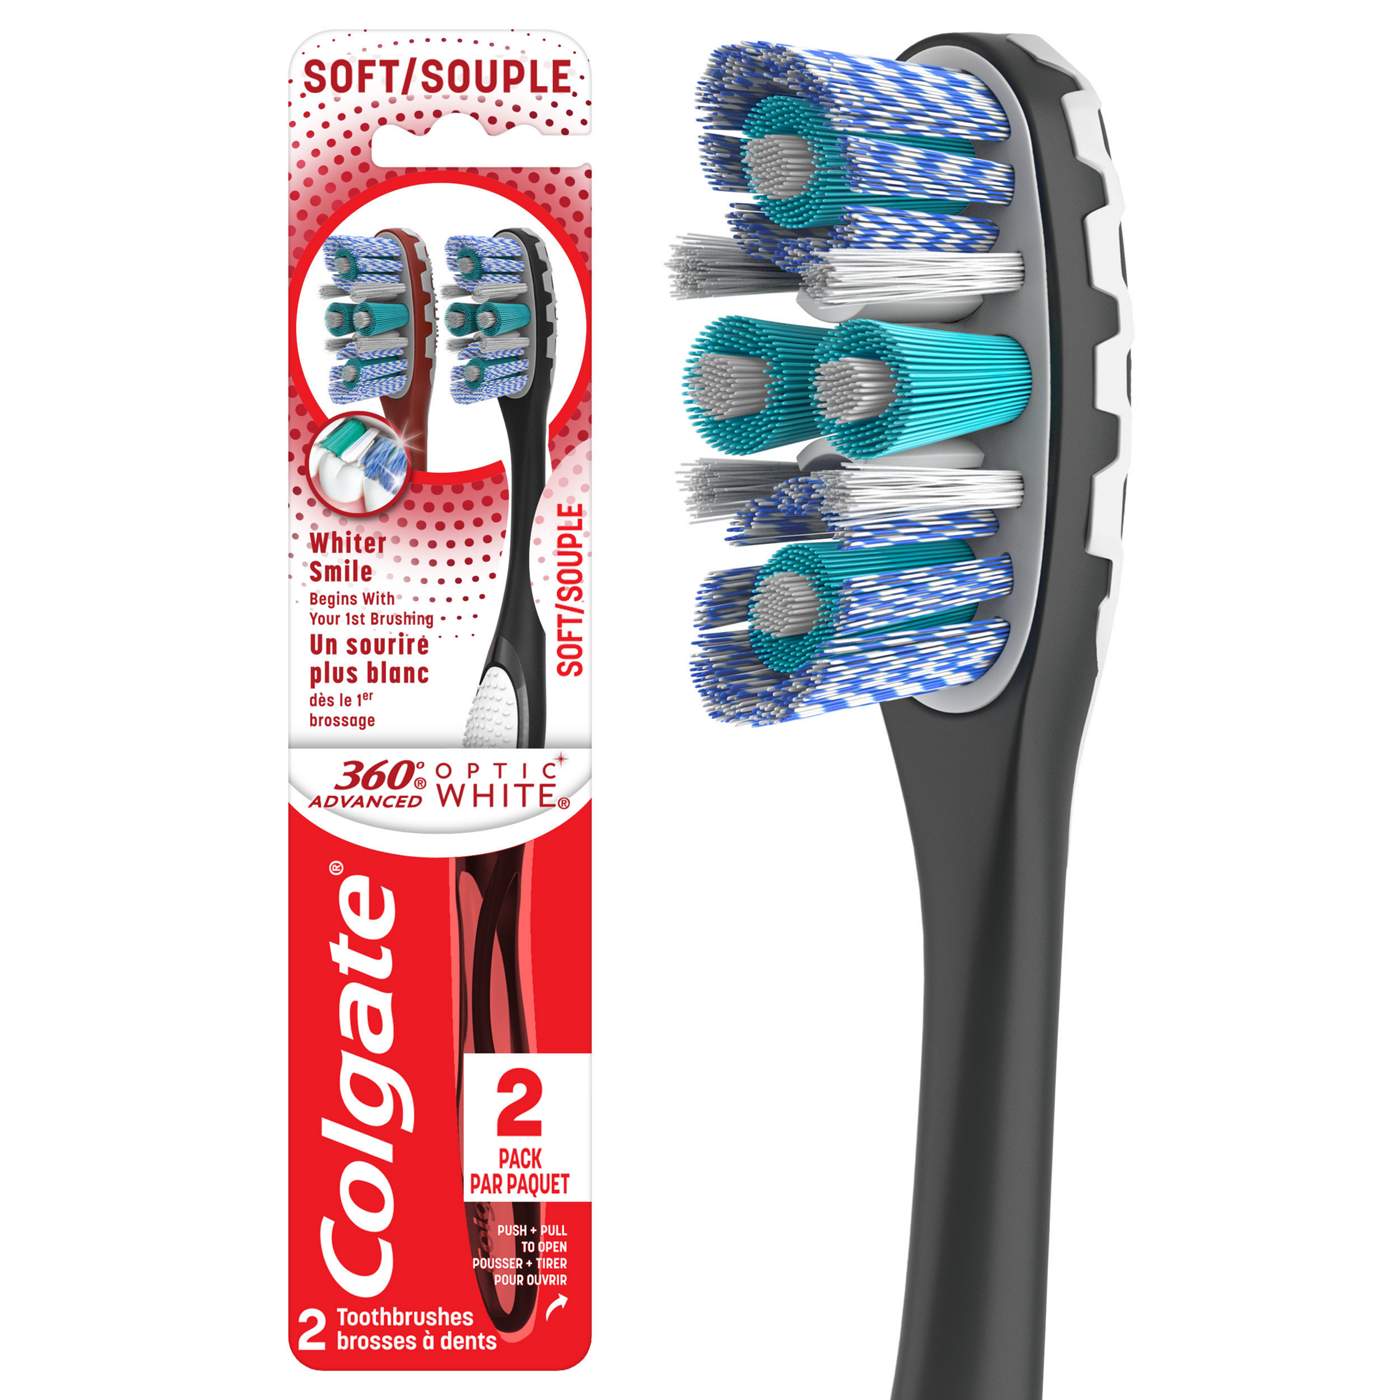 Colgate 360 Advanced Optic White Toothbrush; image 5 of 7